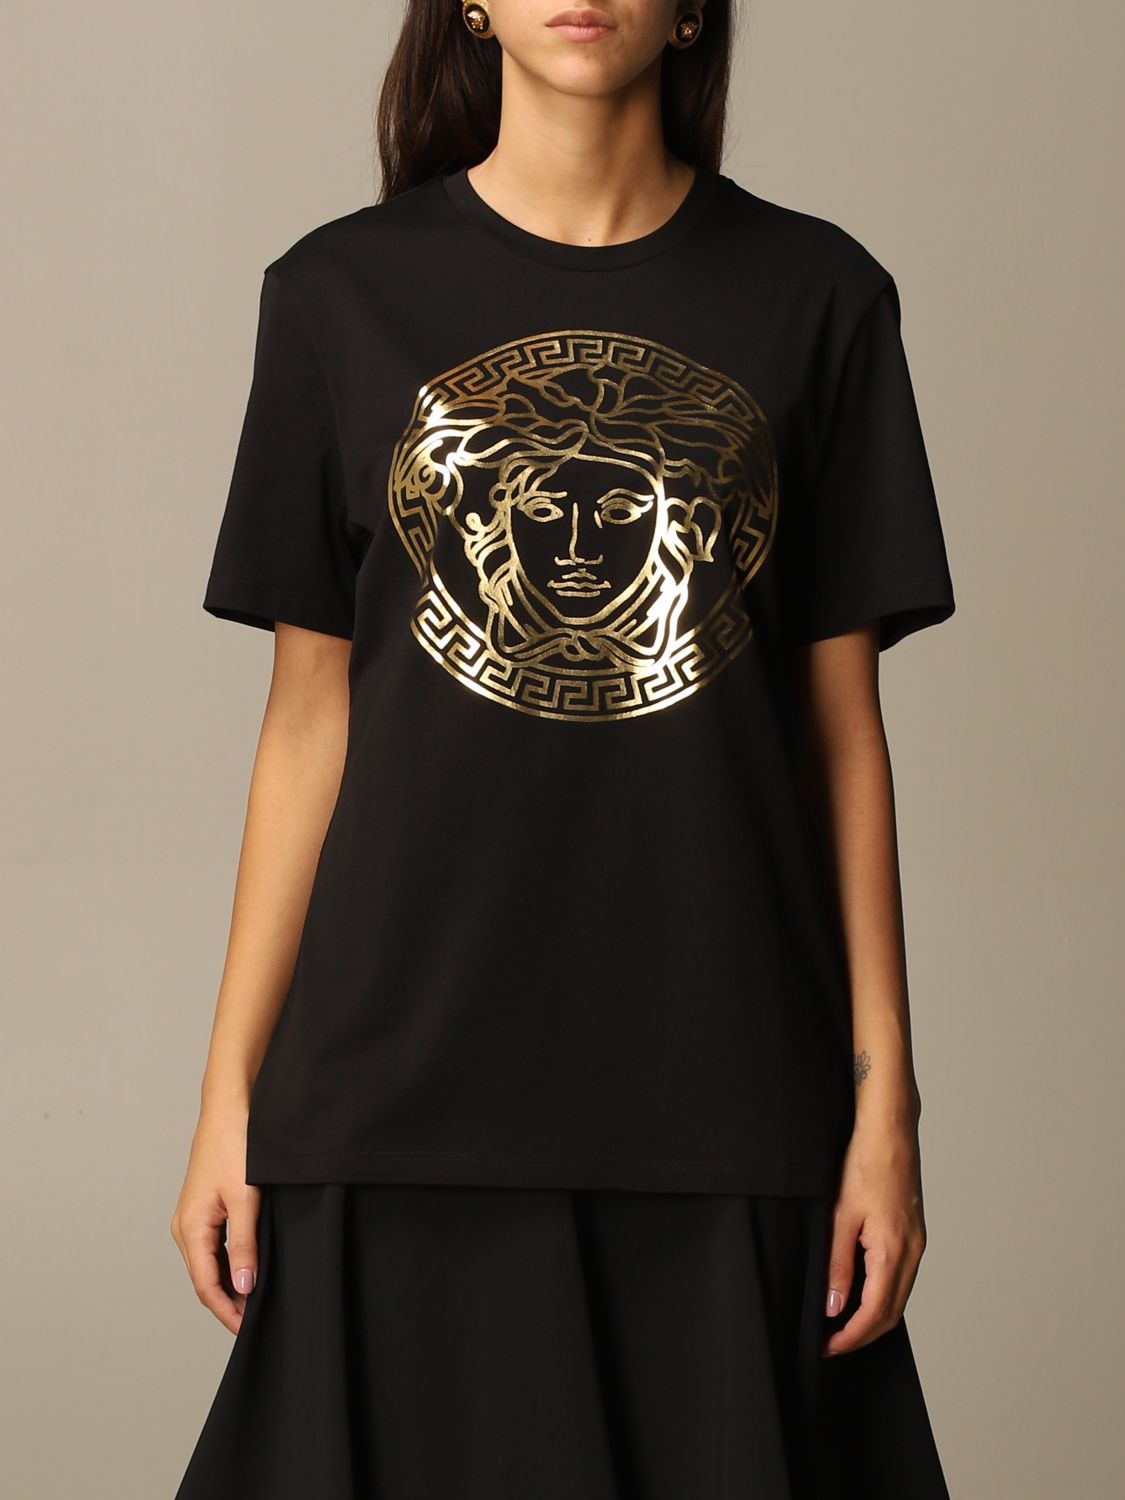 VERSACE: T-shirt with laminated Medusa logo - Black | Versace t 